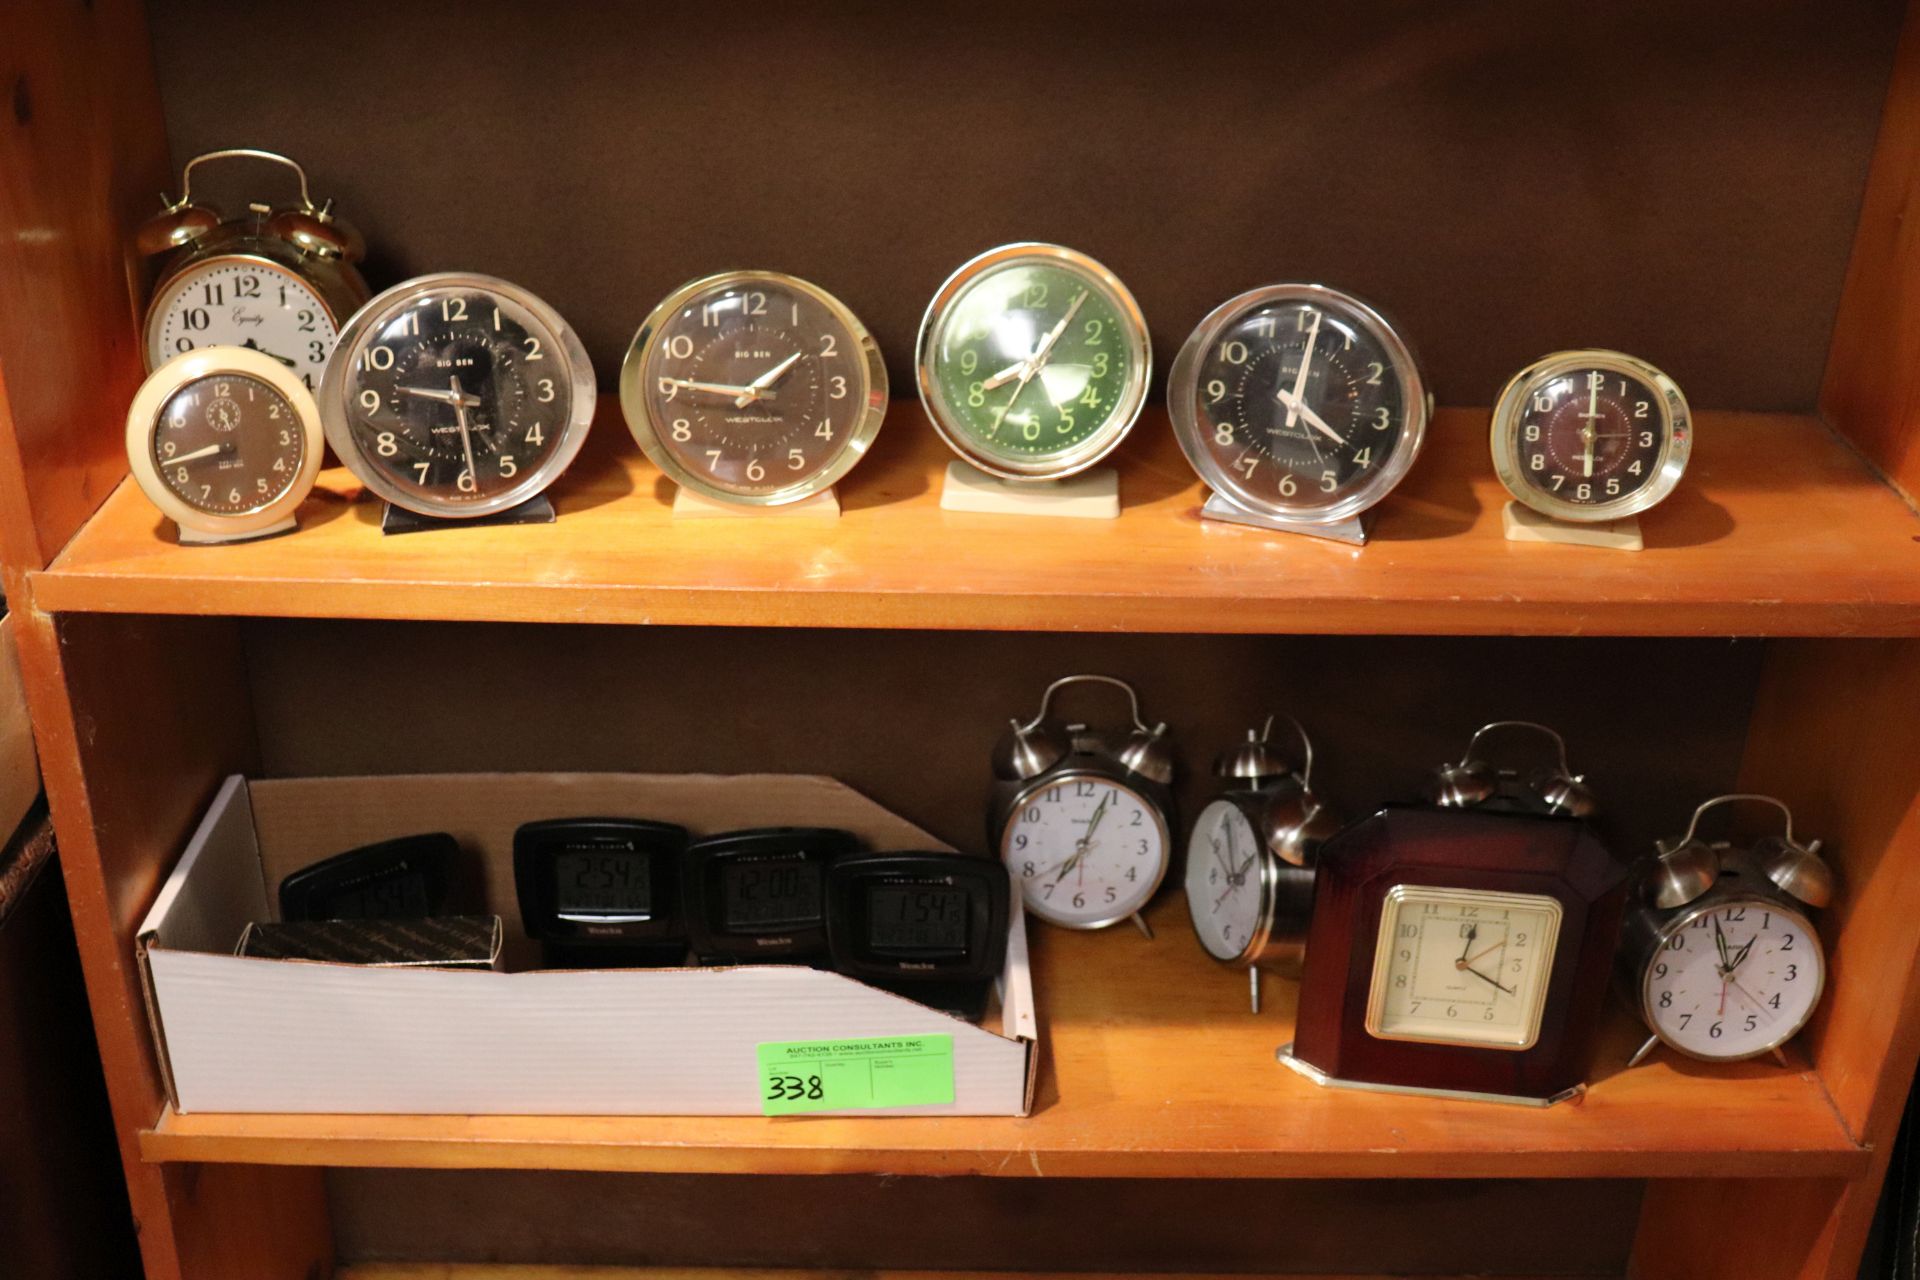 Group of alarm clocks: Big Ben, Equity and Sharp, and Westclox atomic clocks